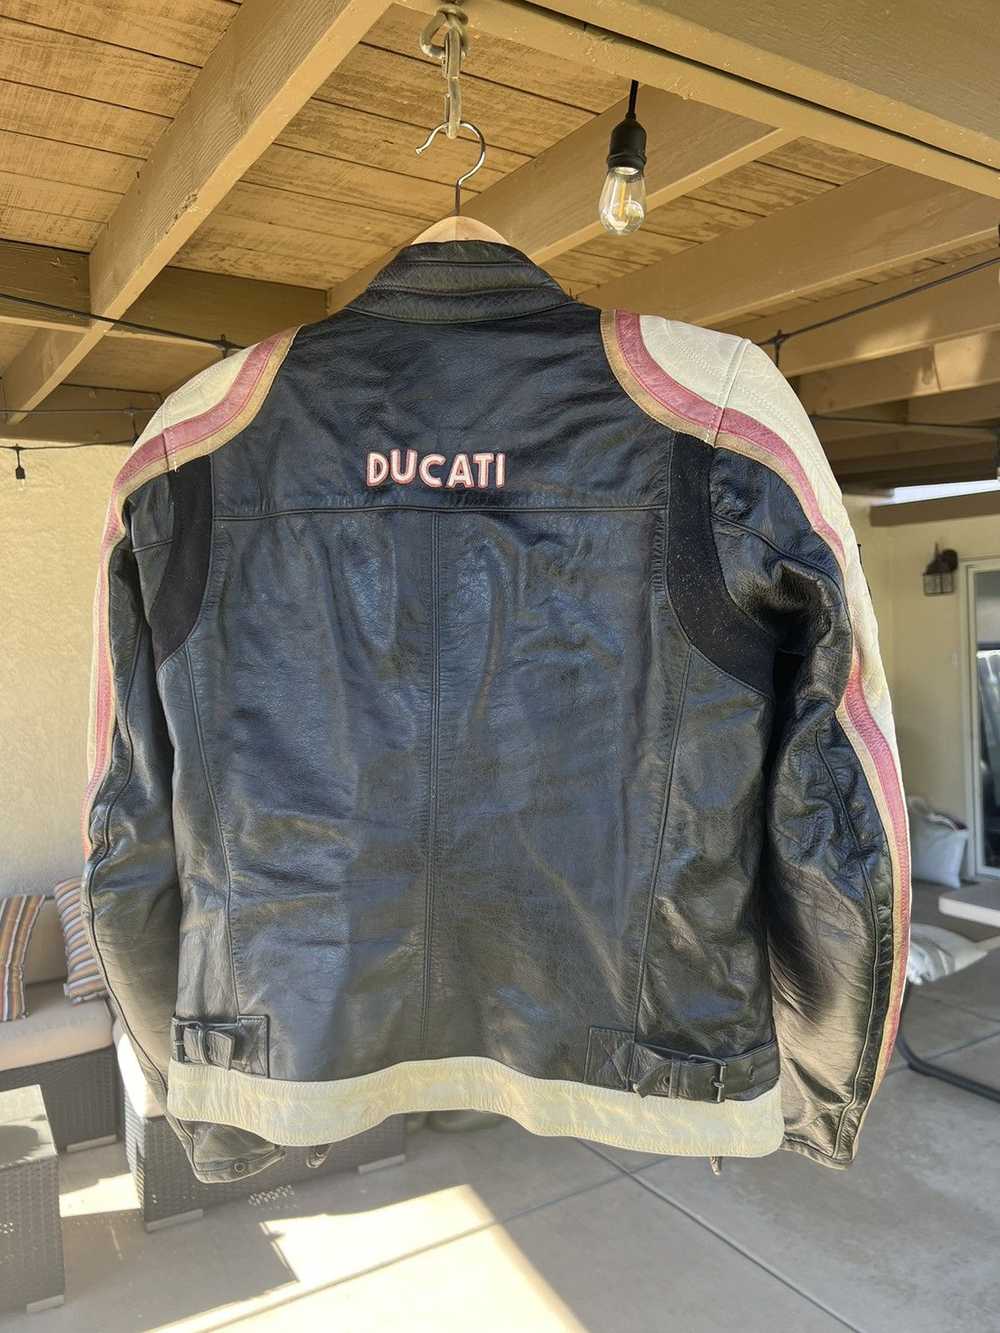 Ducati Ducati Old Times leather moto jacket - image 5